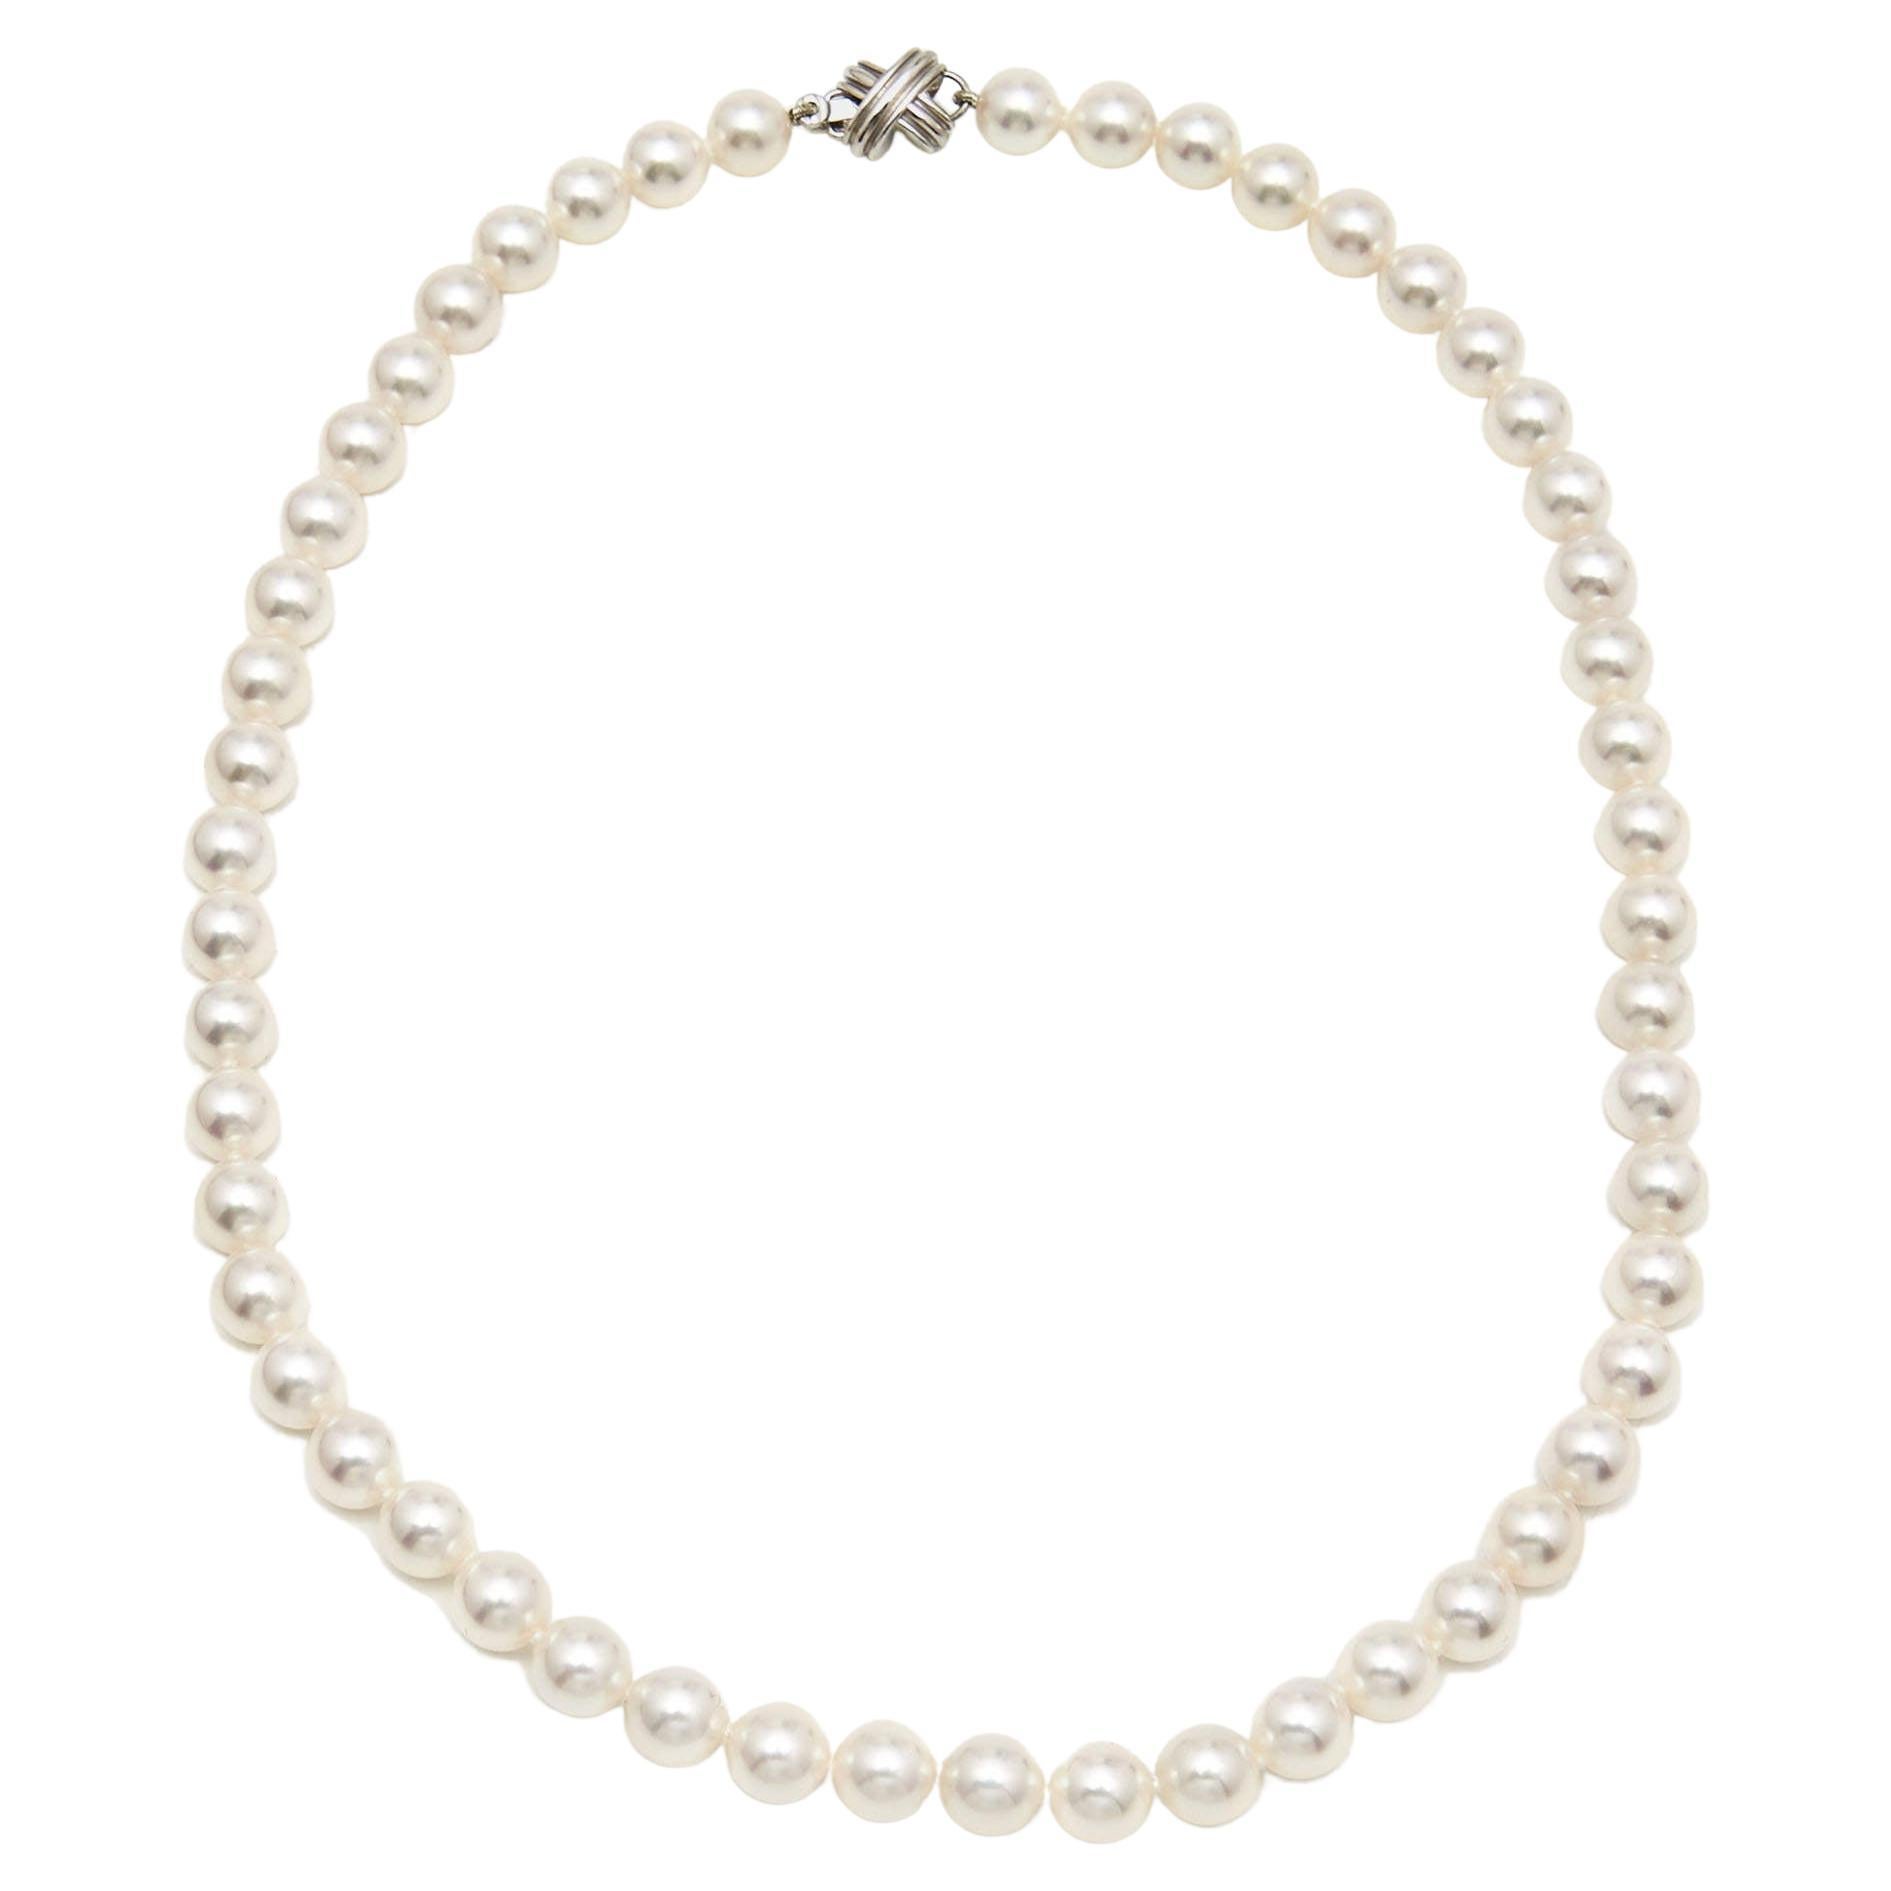 Tiffany & Co. Signature X Cultured Pearl 18k White Gold Necklace